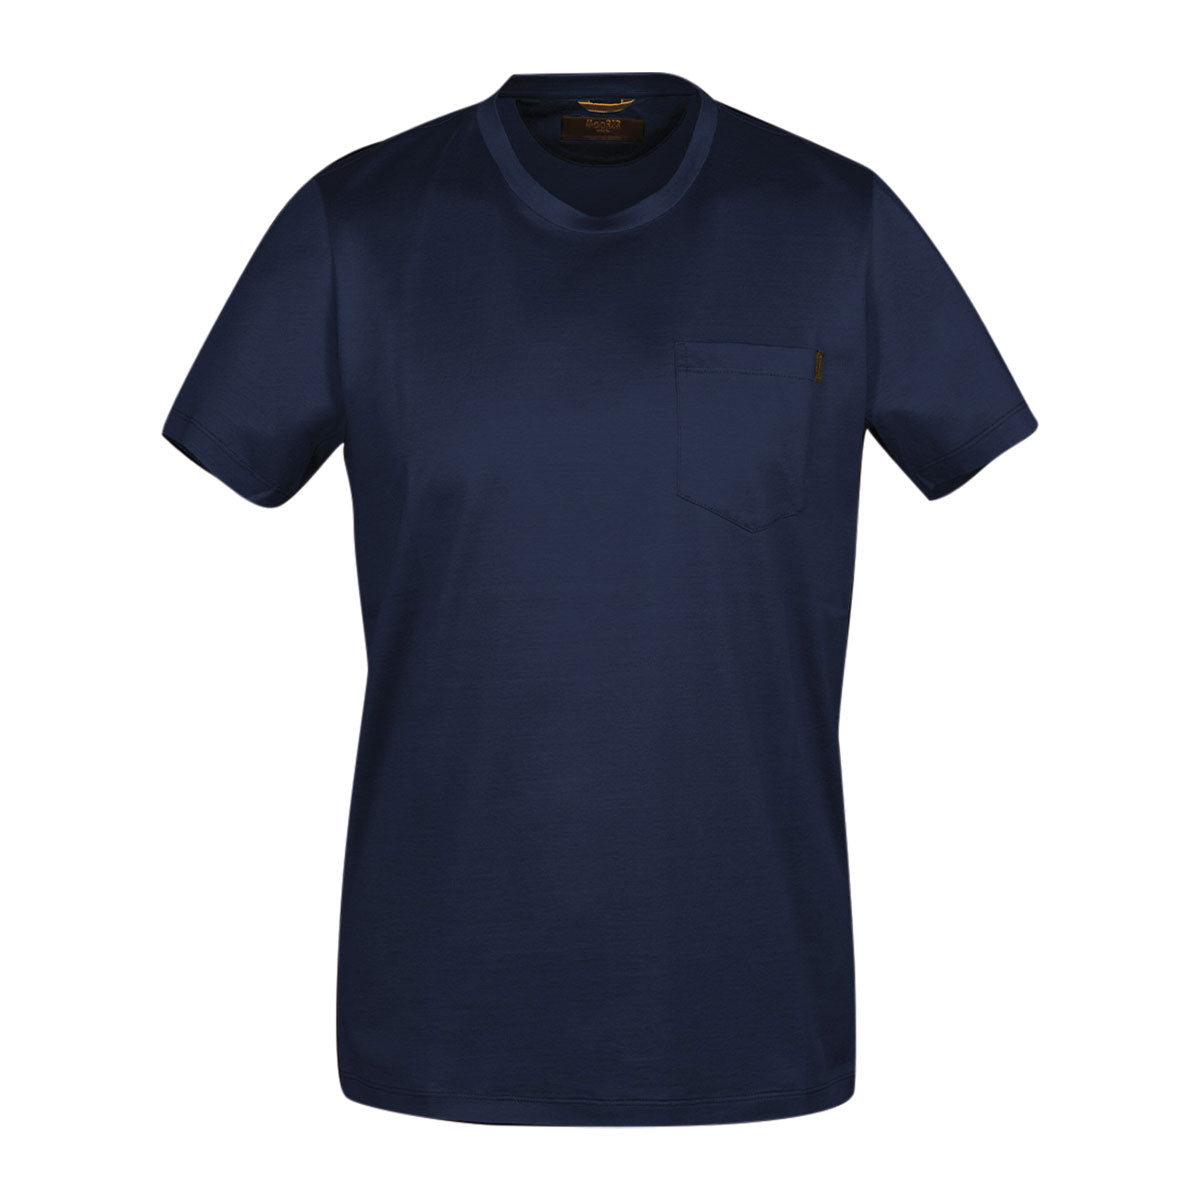 Navy ‘Bruzio’ Crew Neck Pure Cotton T-shirt Short Sleeve Moorer   